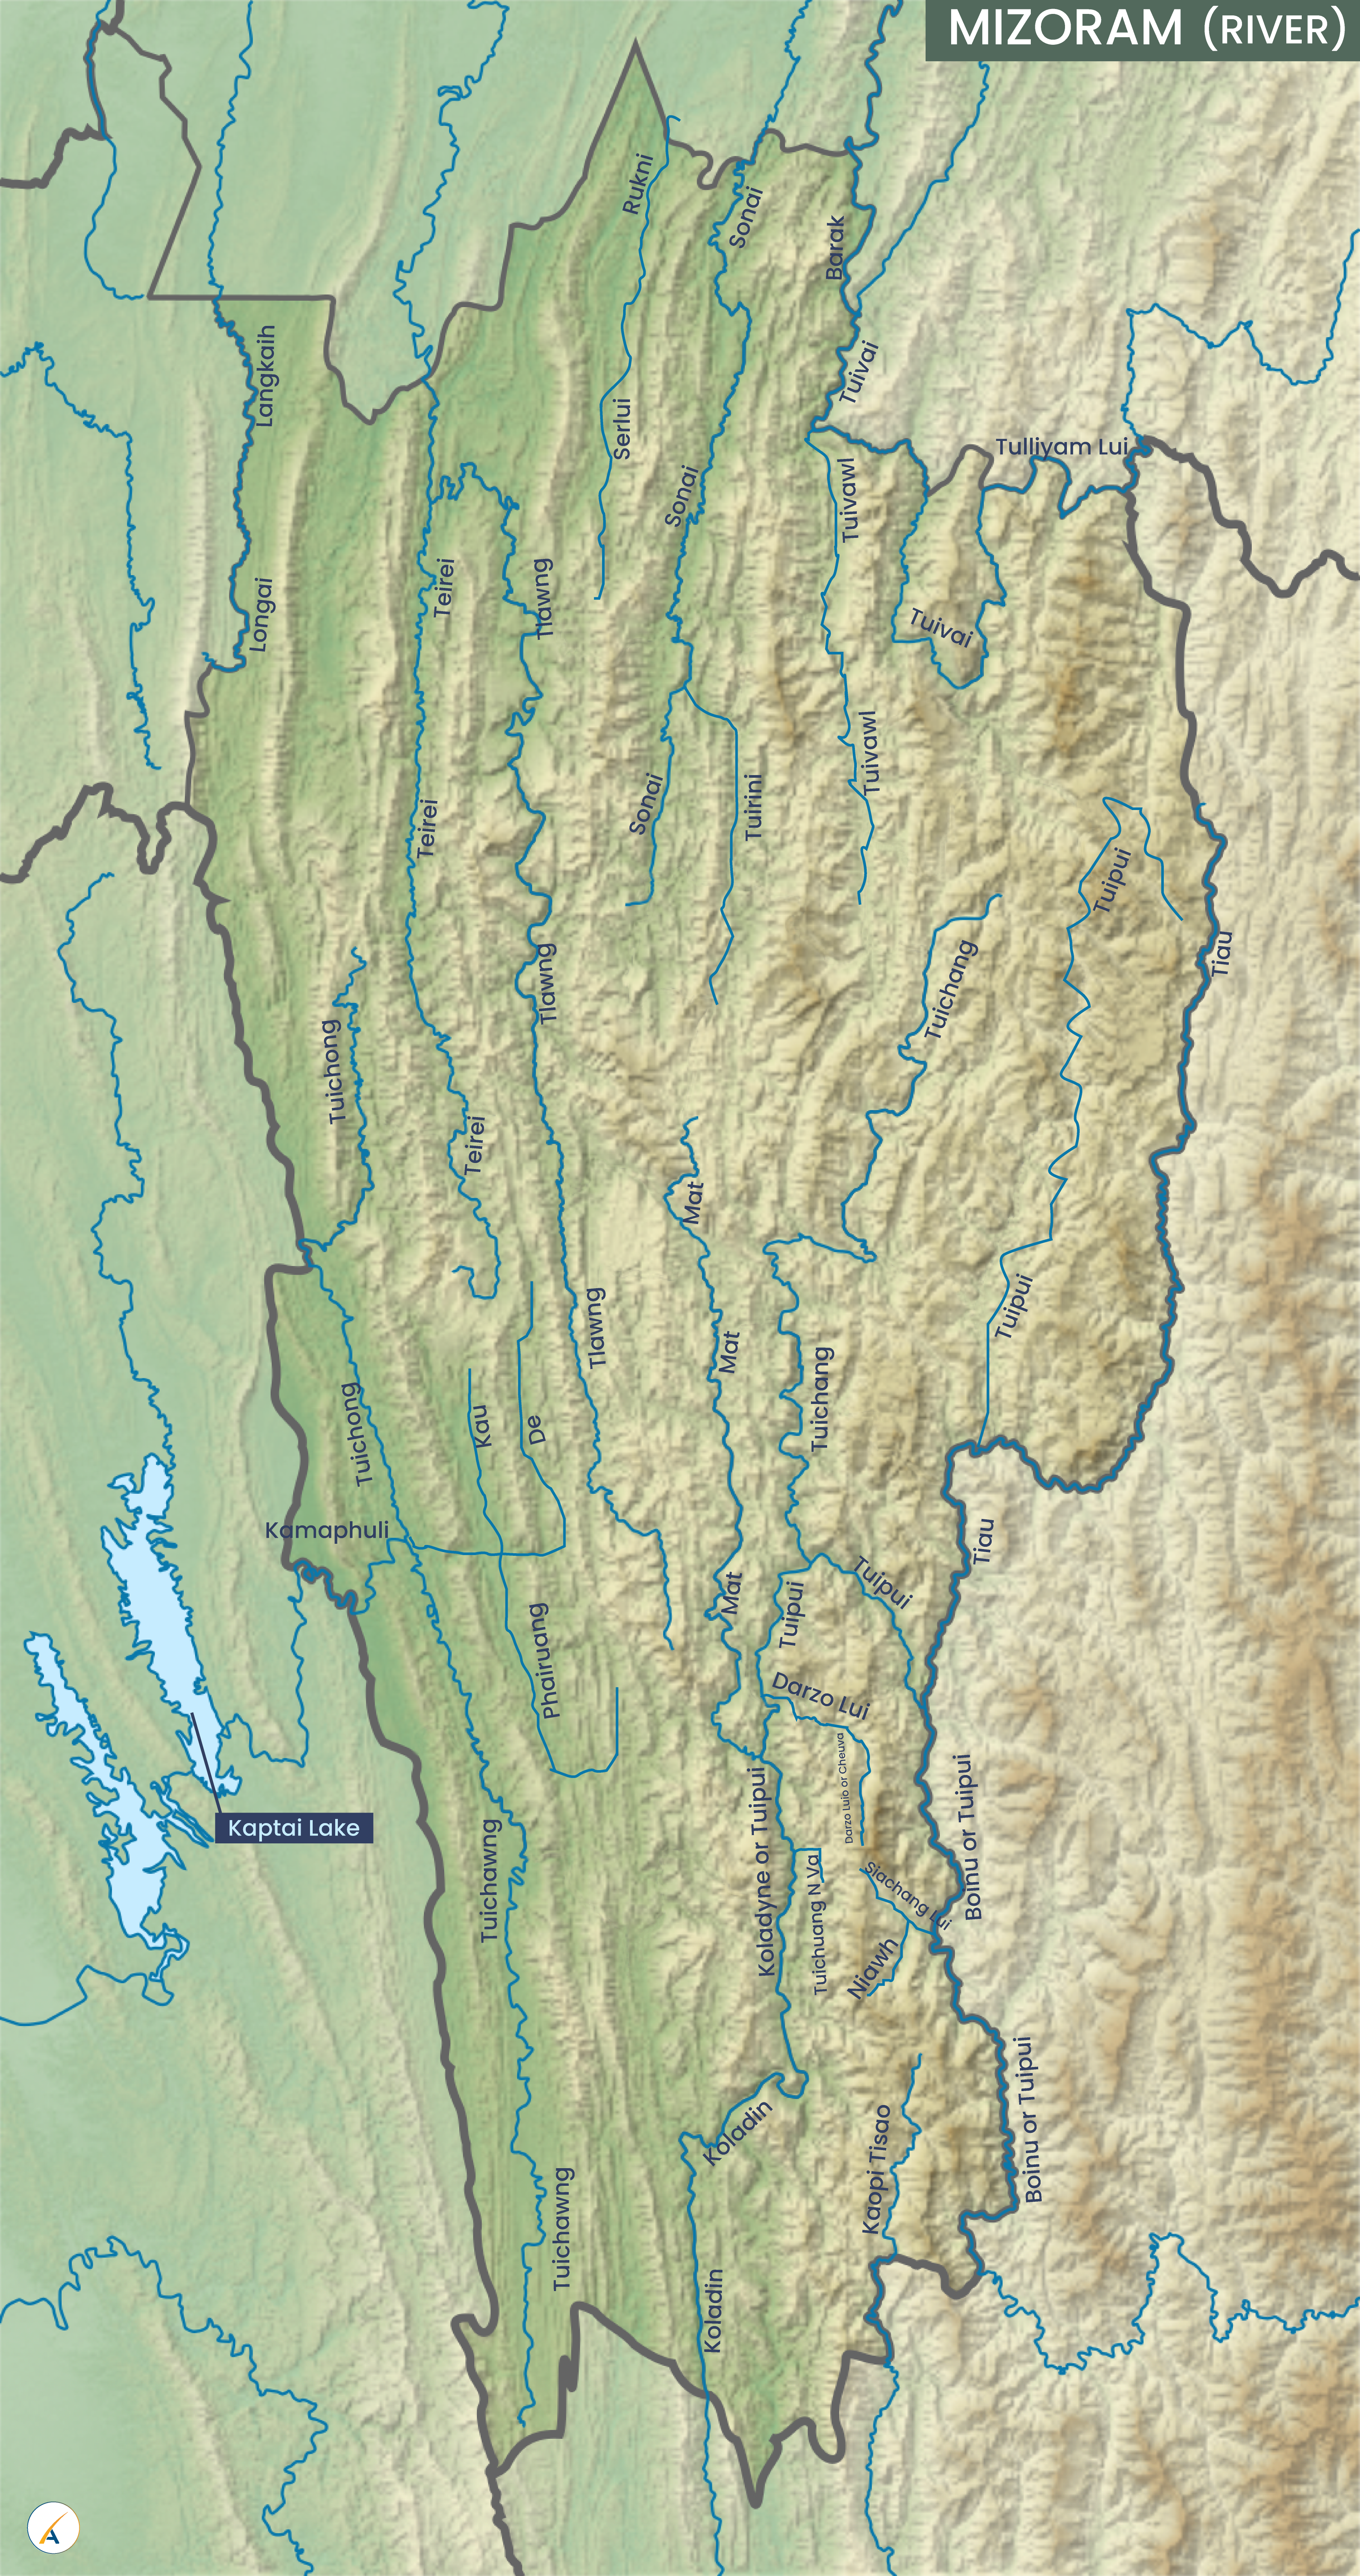 Mizoram River Map